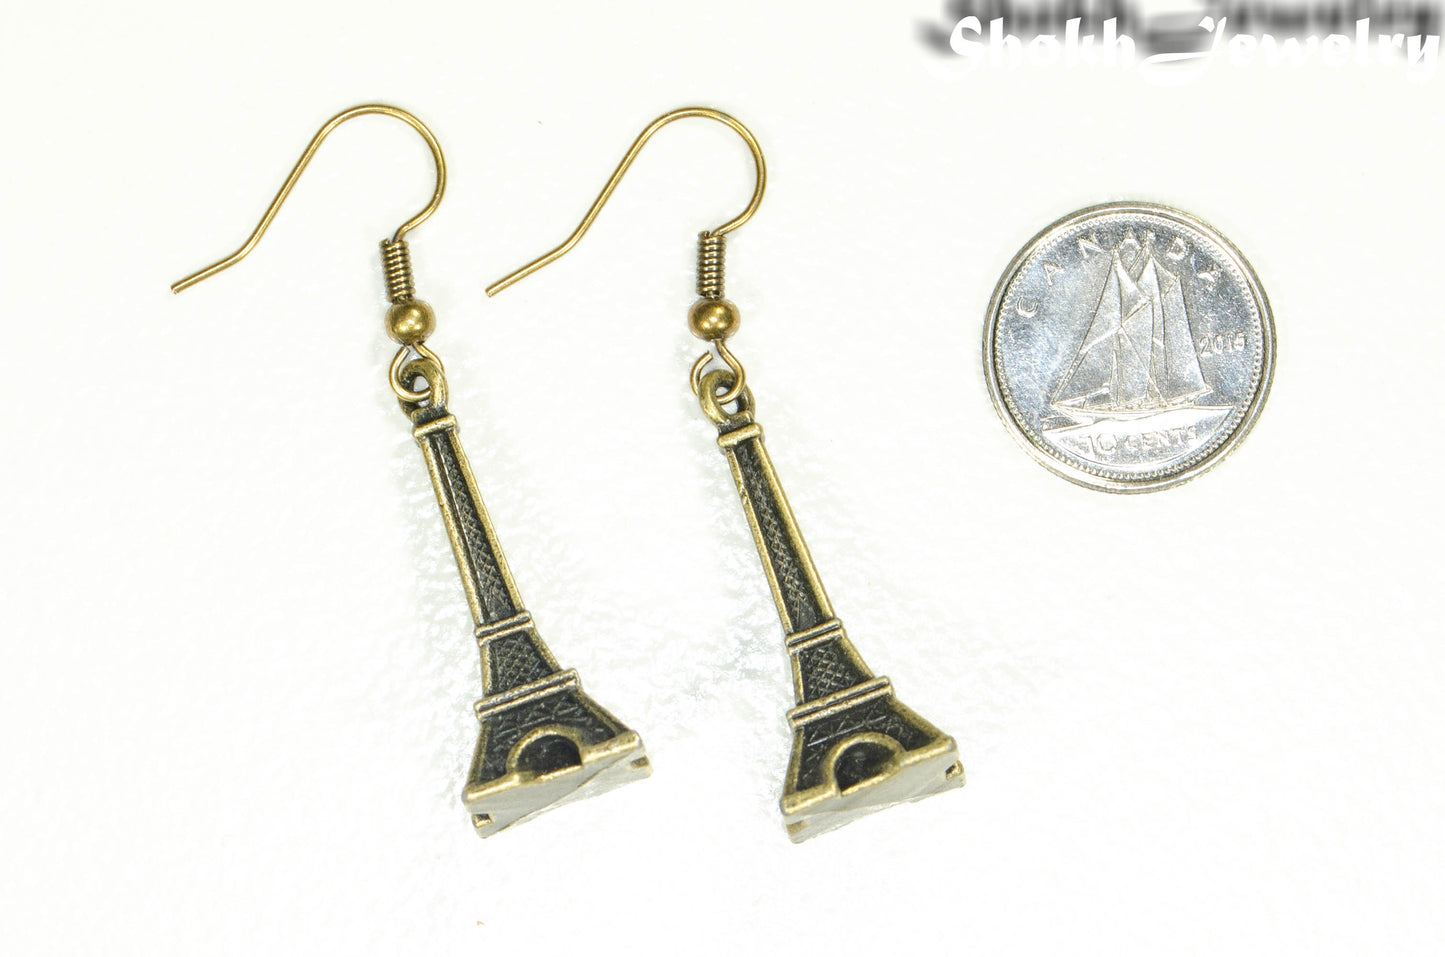 Antique Bronze 3D Eiffel Tower Charm Earrings beside a dime.